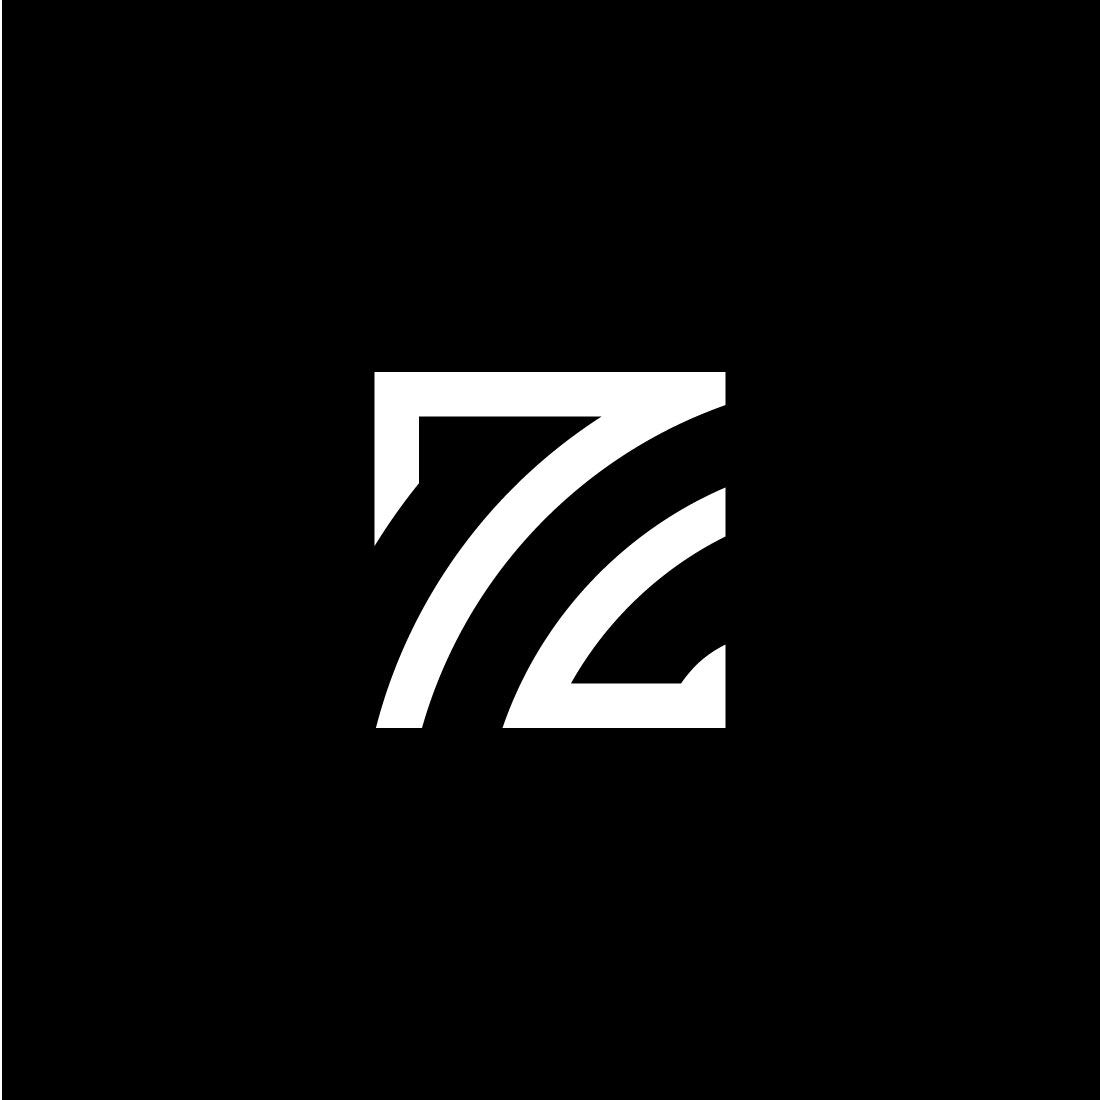 Z Letter Logo Design cover image.